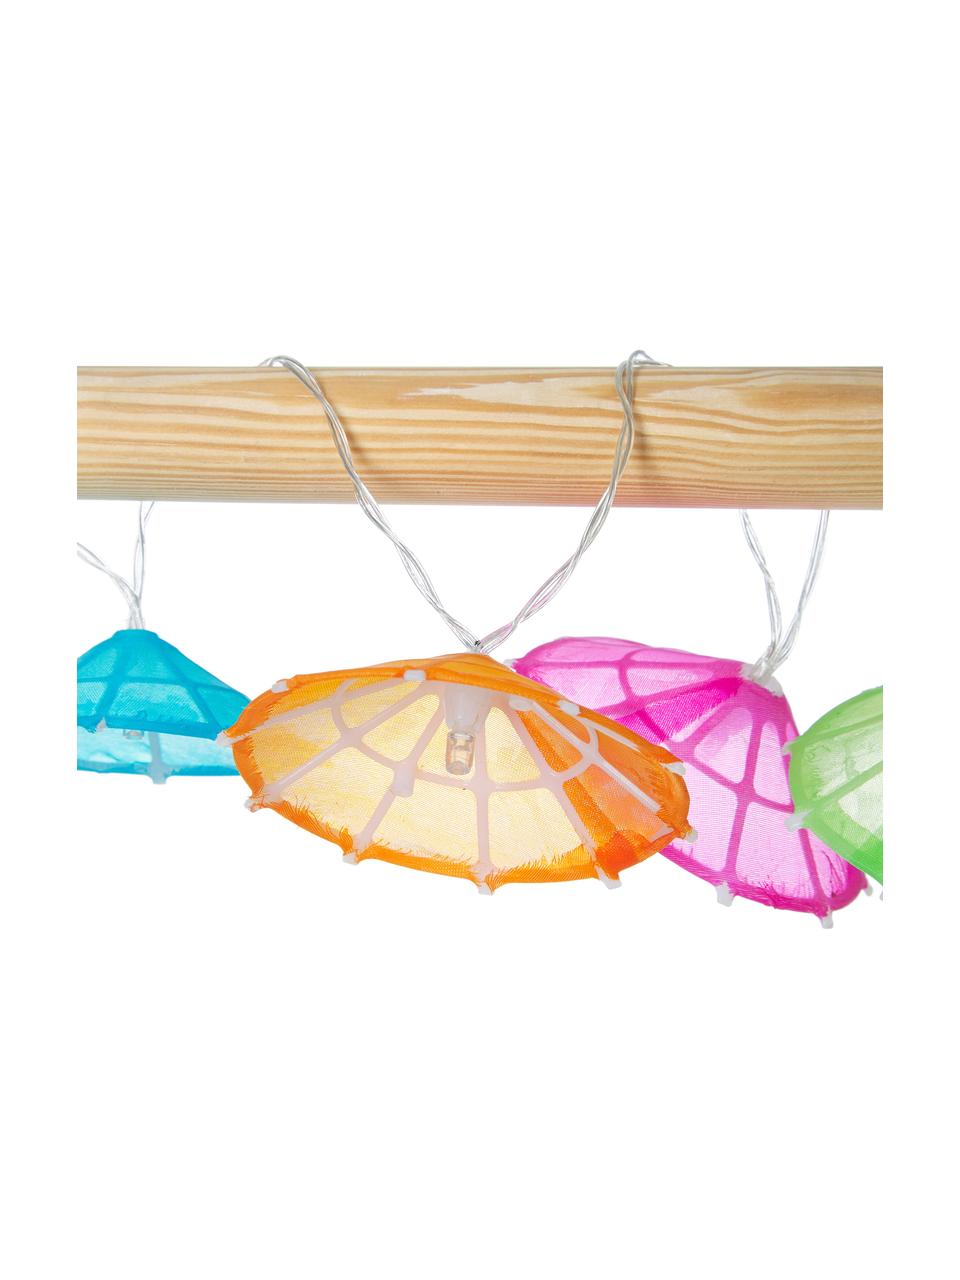 Girlanda świetlna LED Umbrella, dł. 165 cm i 10 lampionów, Wielobarwny, D 165 cm